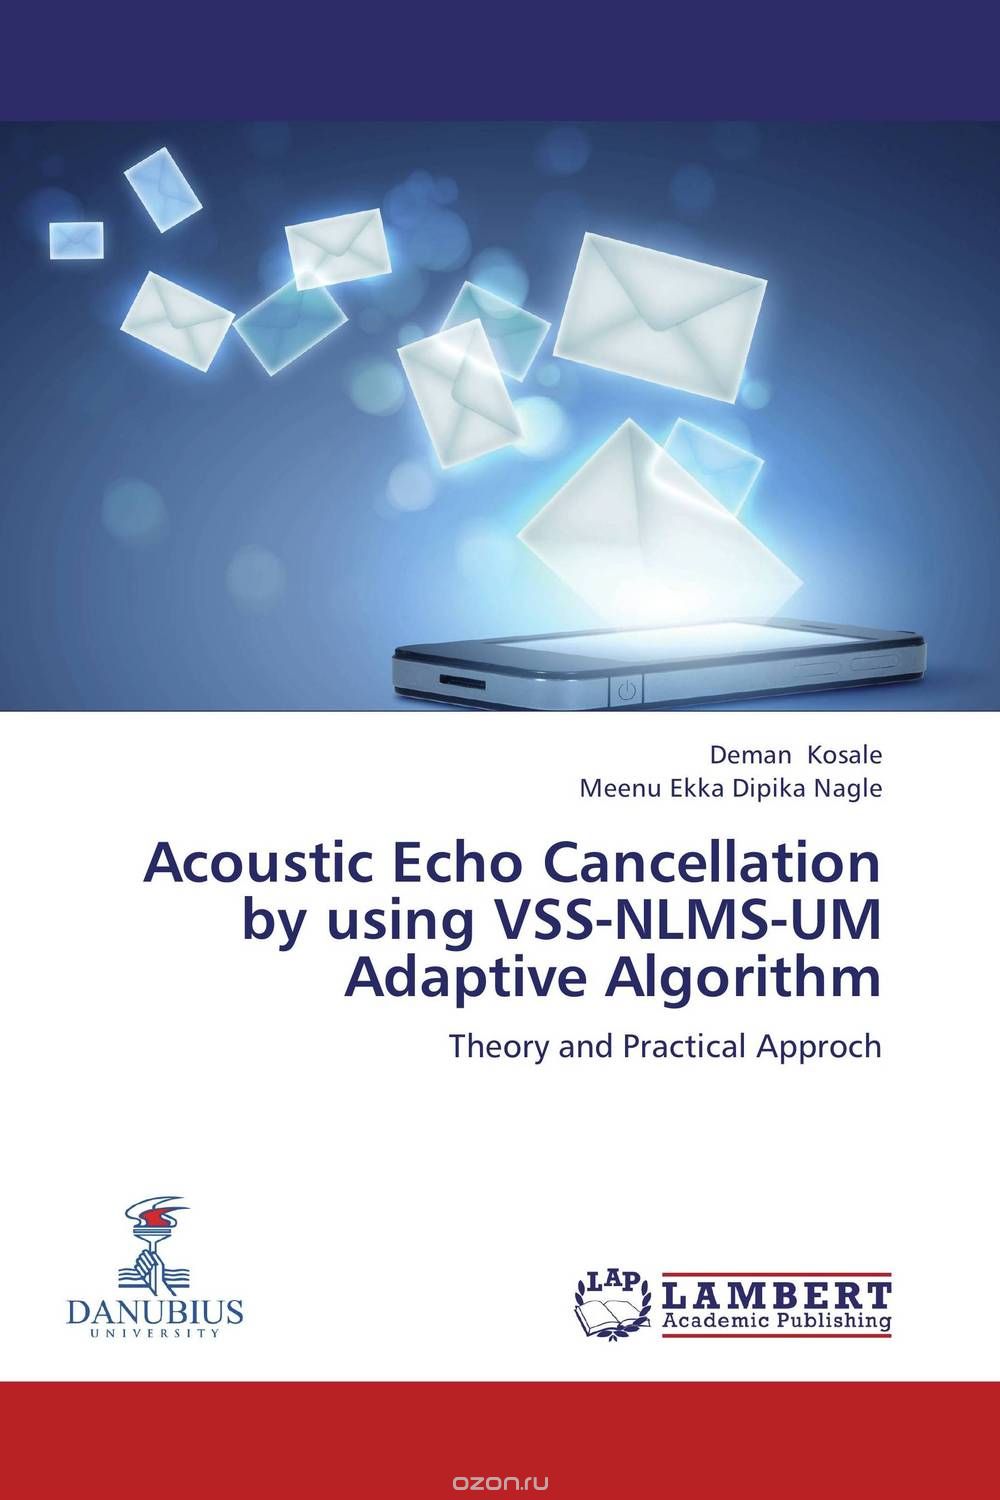 Acoustic Echo Cancellation by using VSS-NLMS-UM Adaptive Algorithm